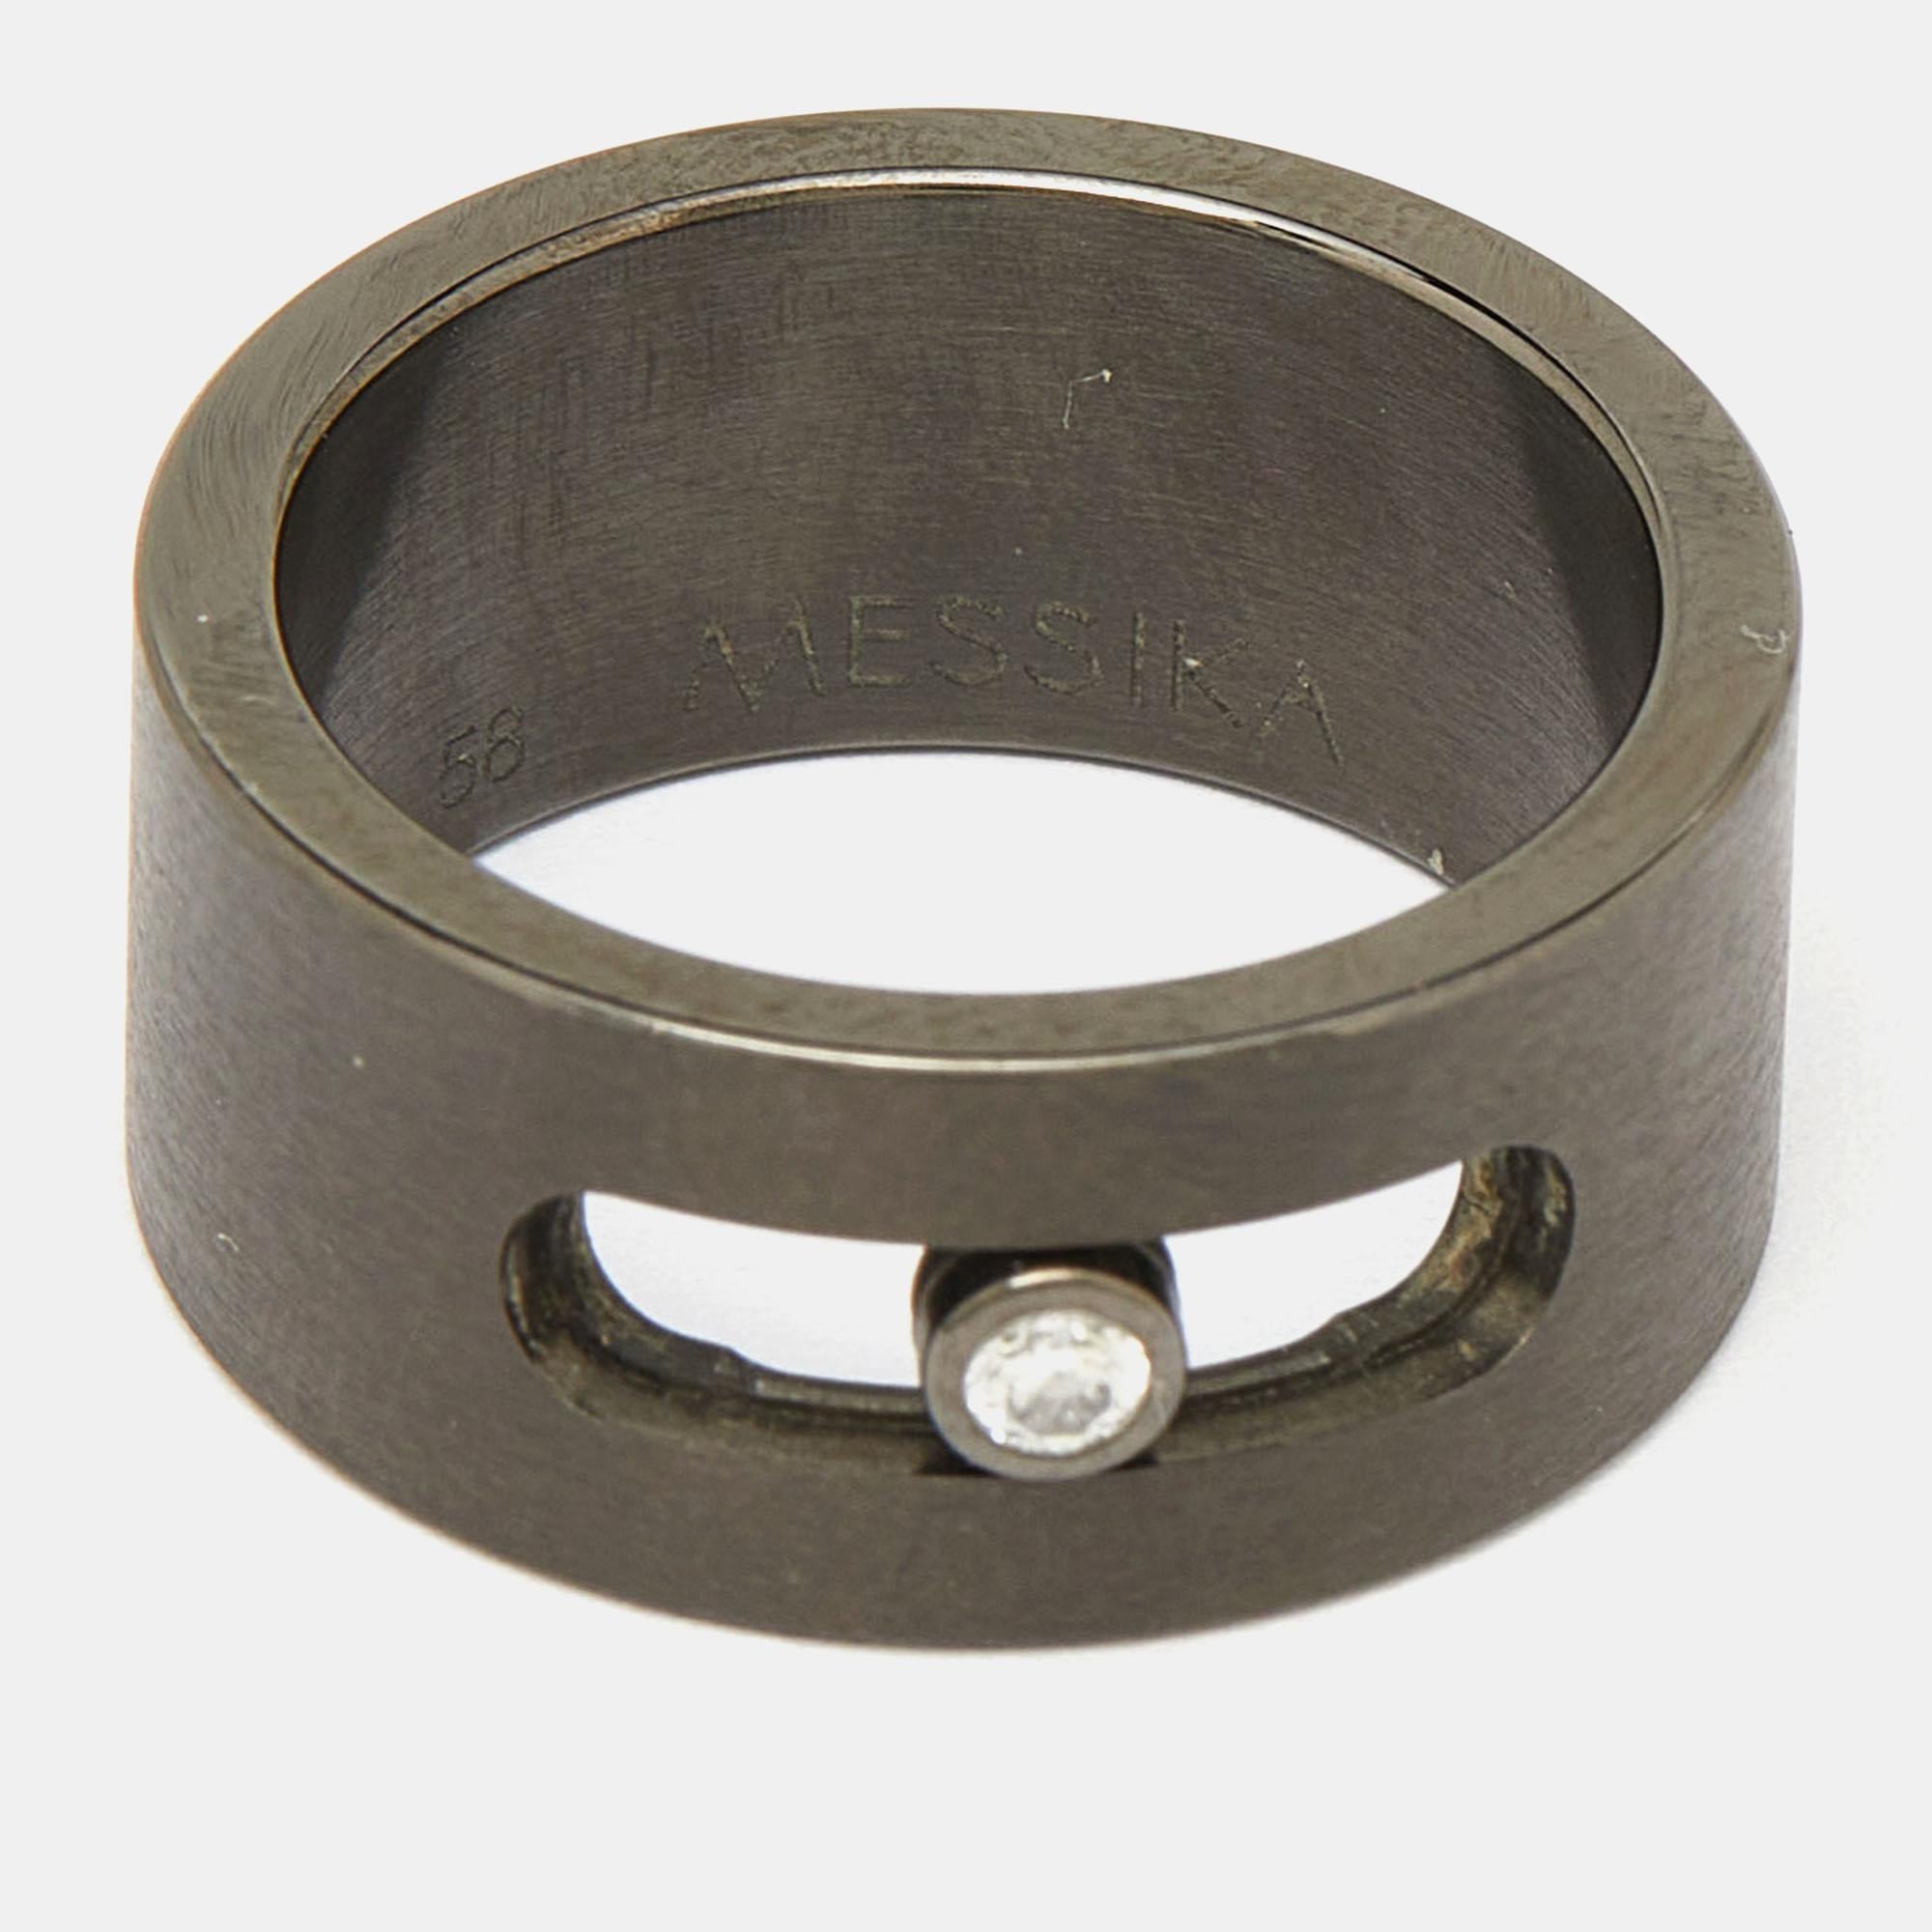 Messika Move Titanium Diamond Ring Size 58 For Sale 1